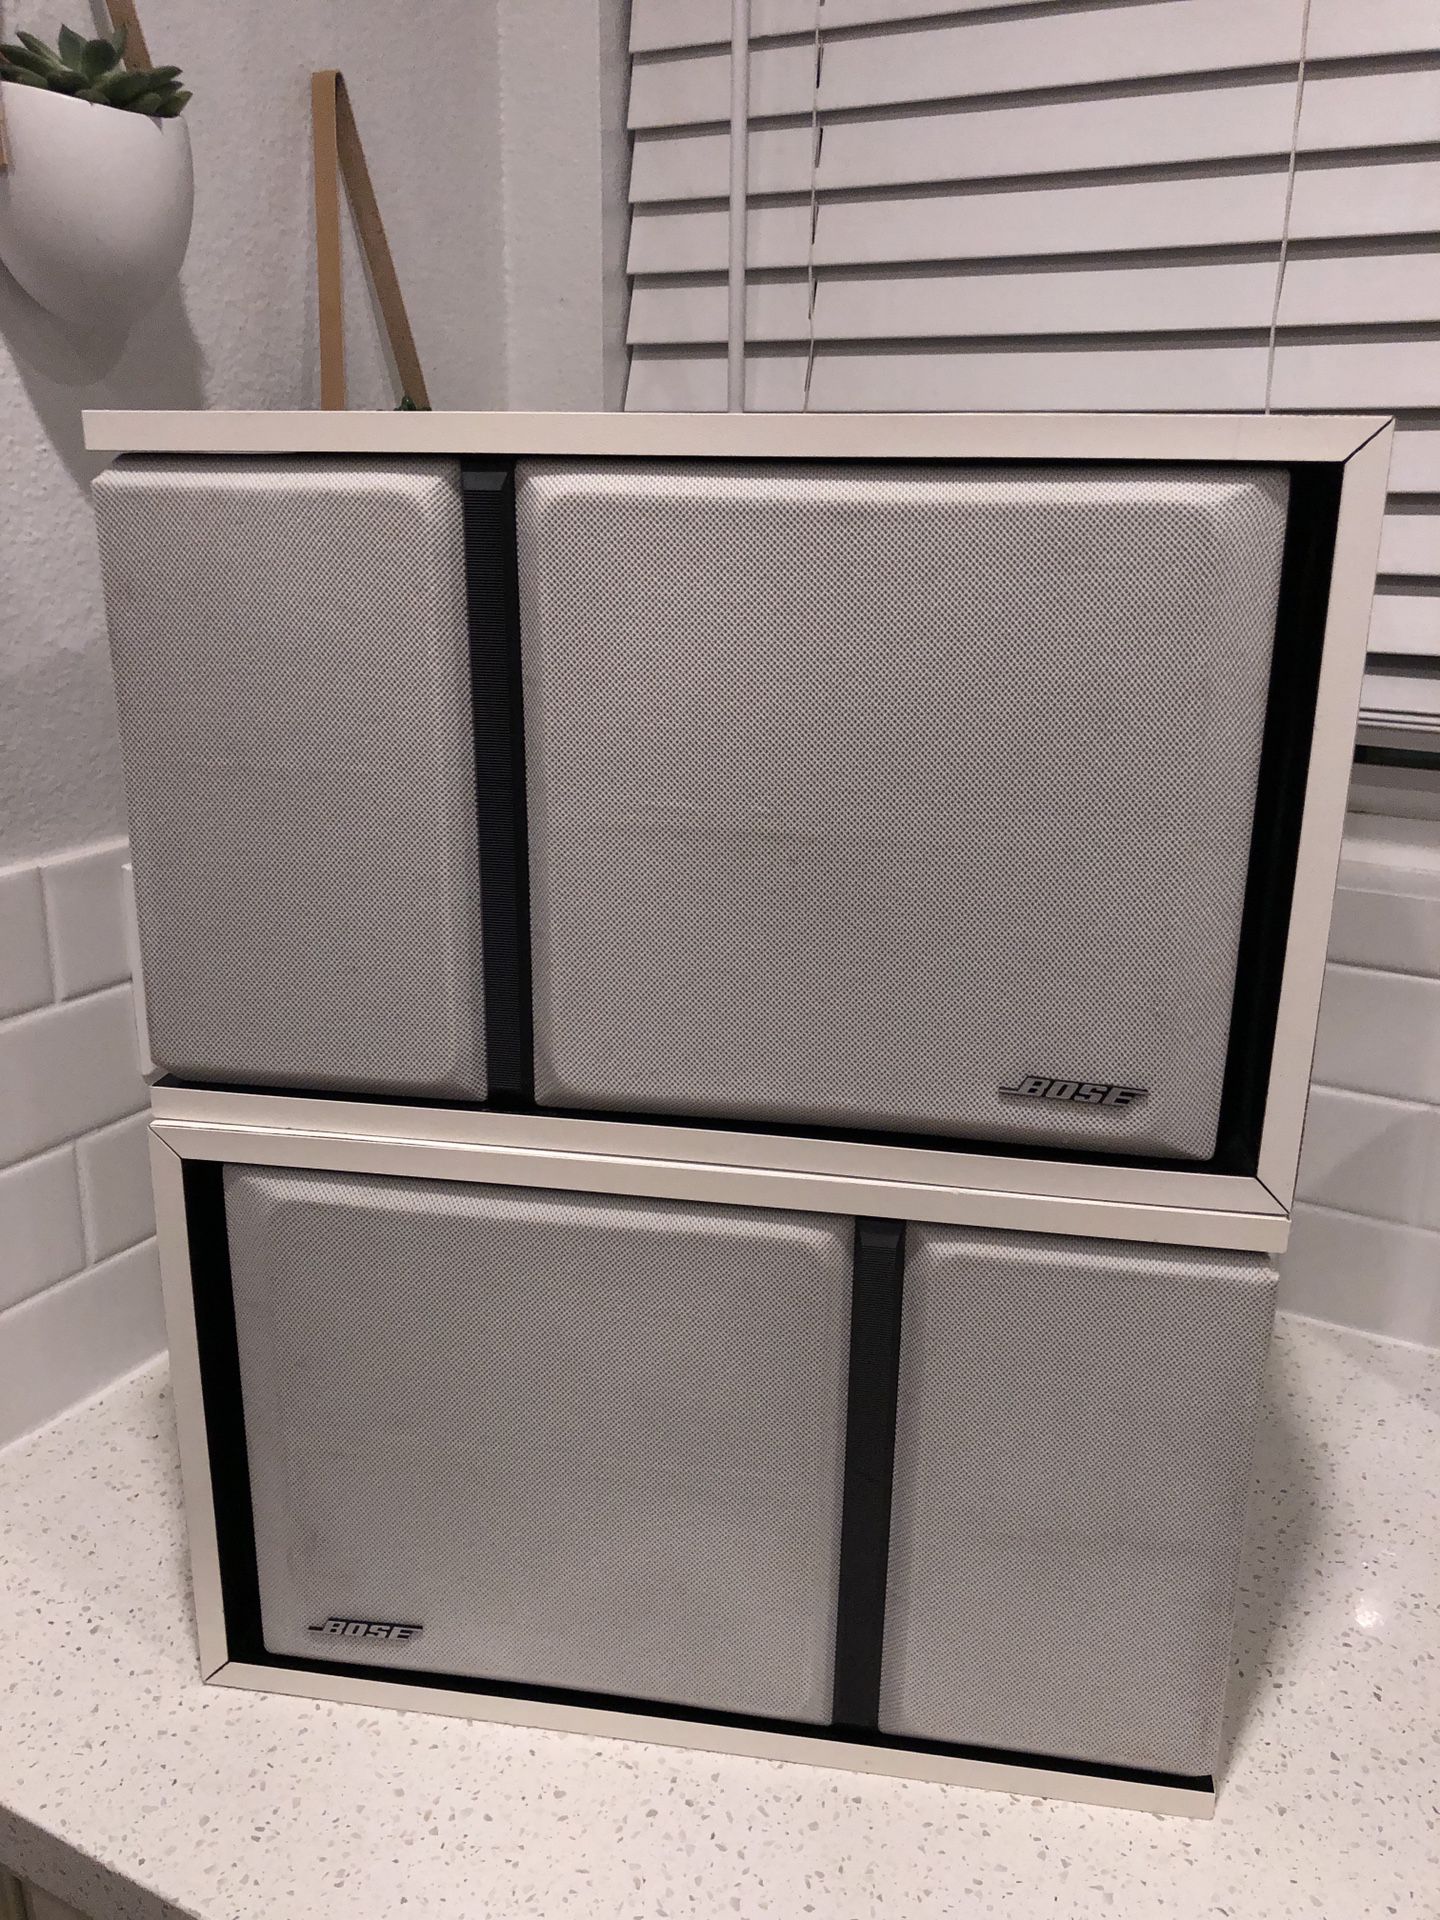 Bose 301 Series III Speakers pair very rare white